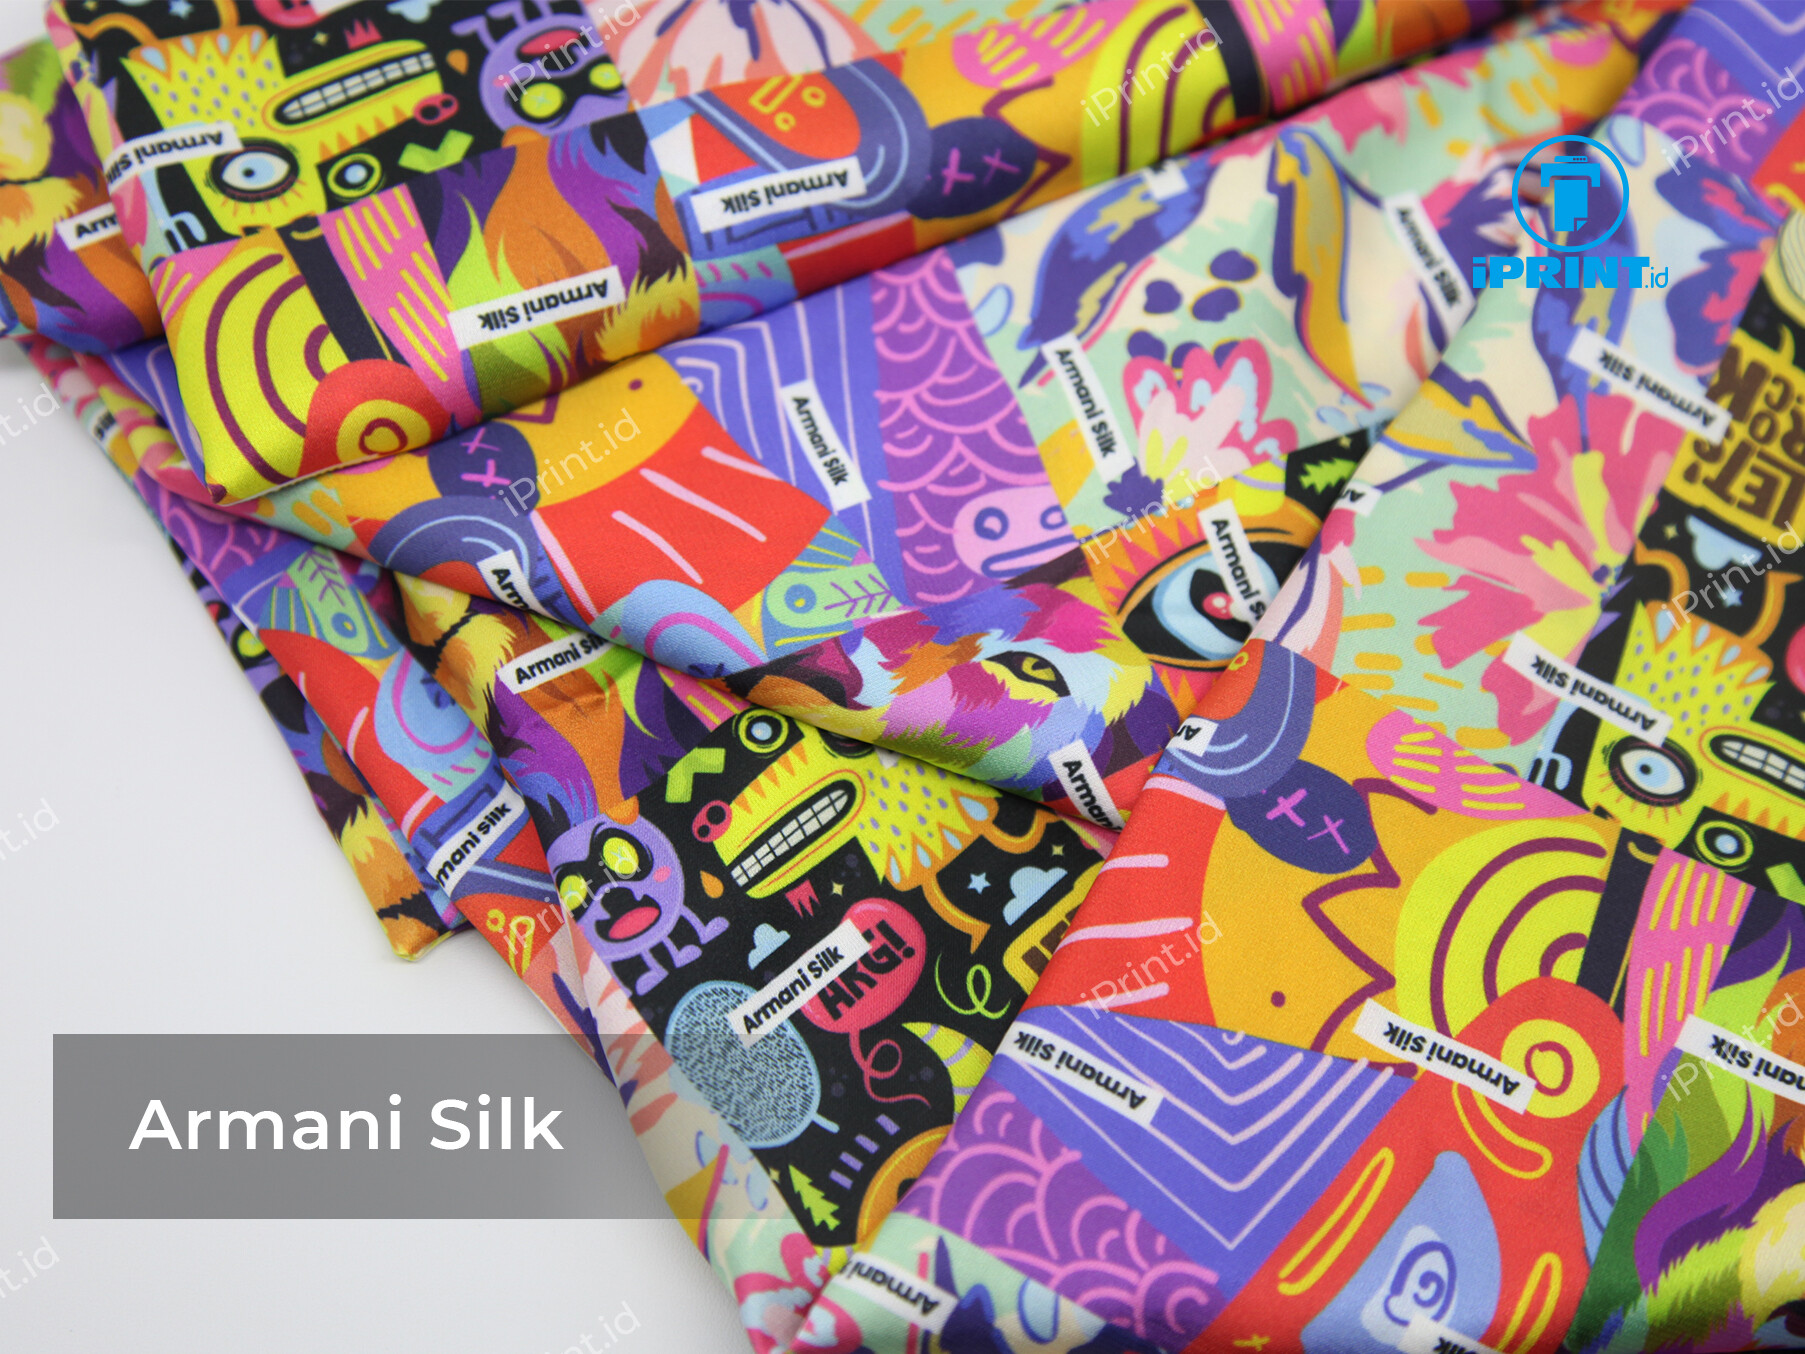 Armani Silk